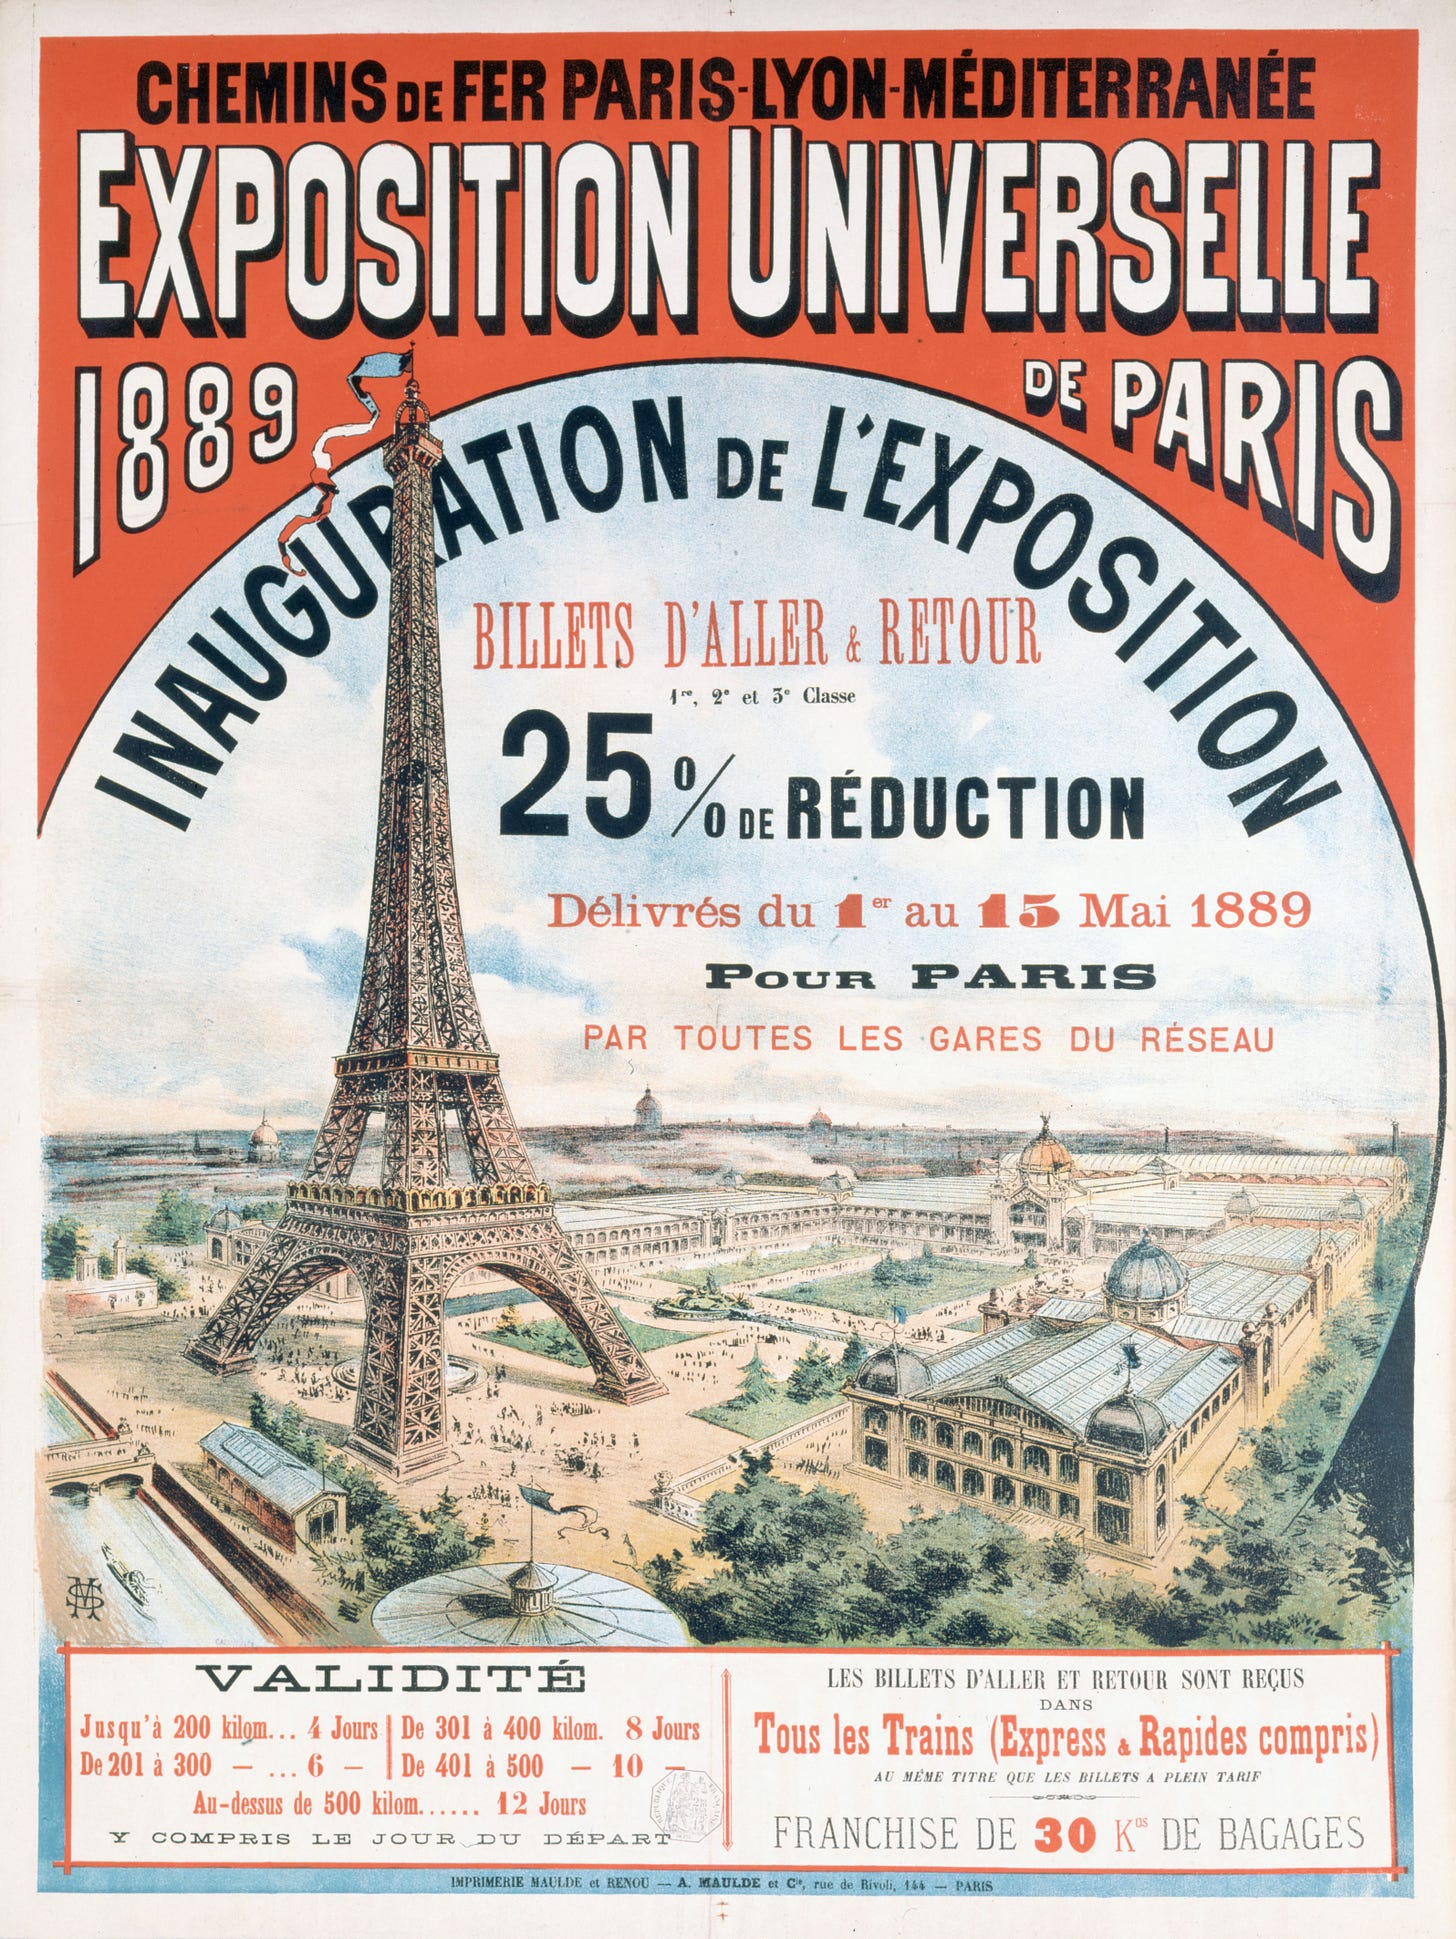 Exposition Universelle (1889) - Wikipedia